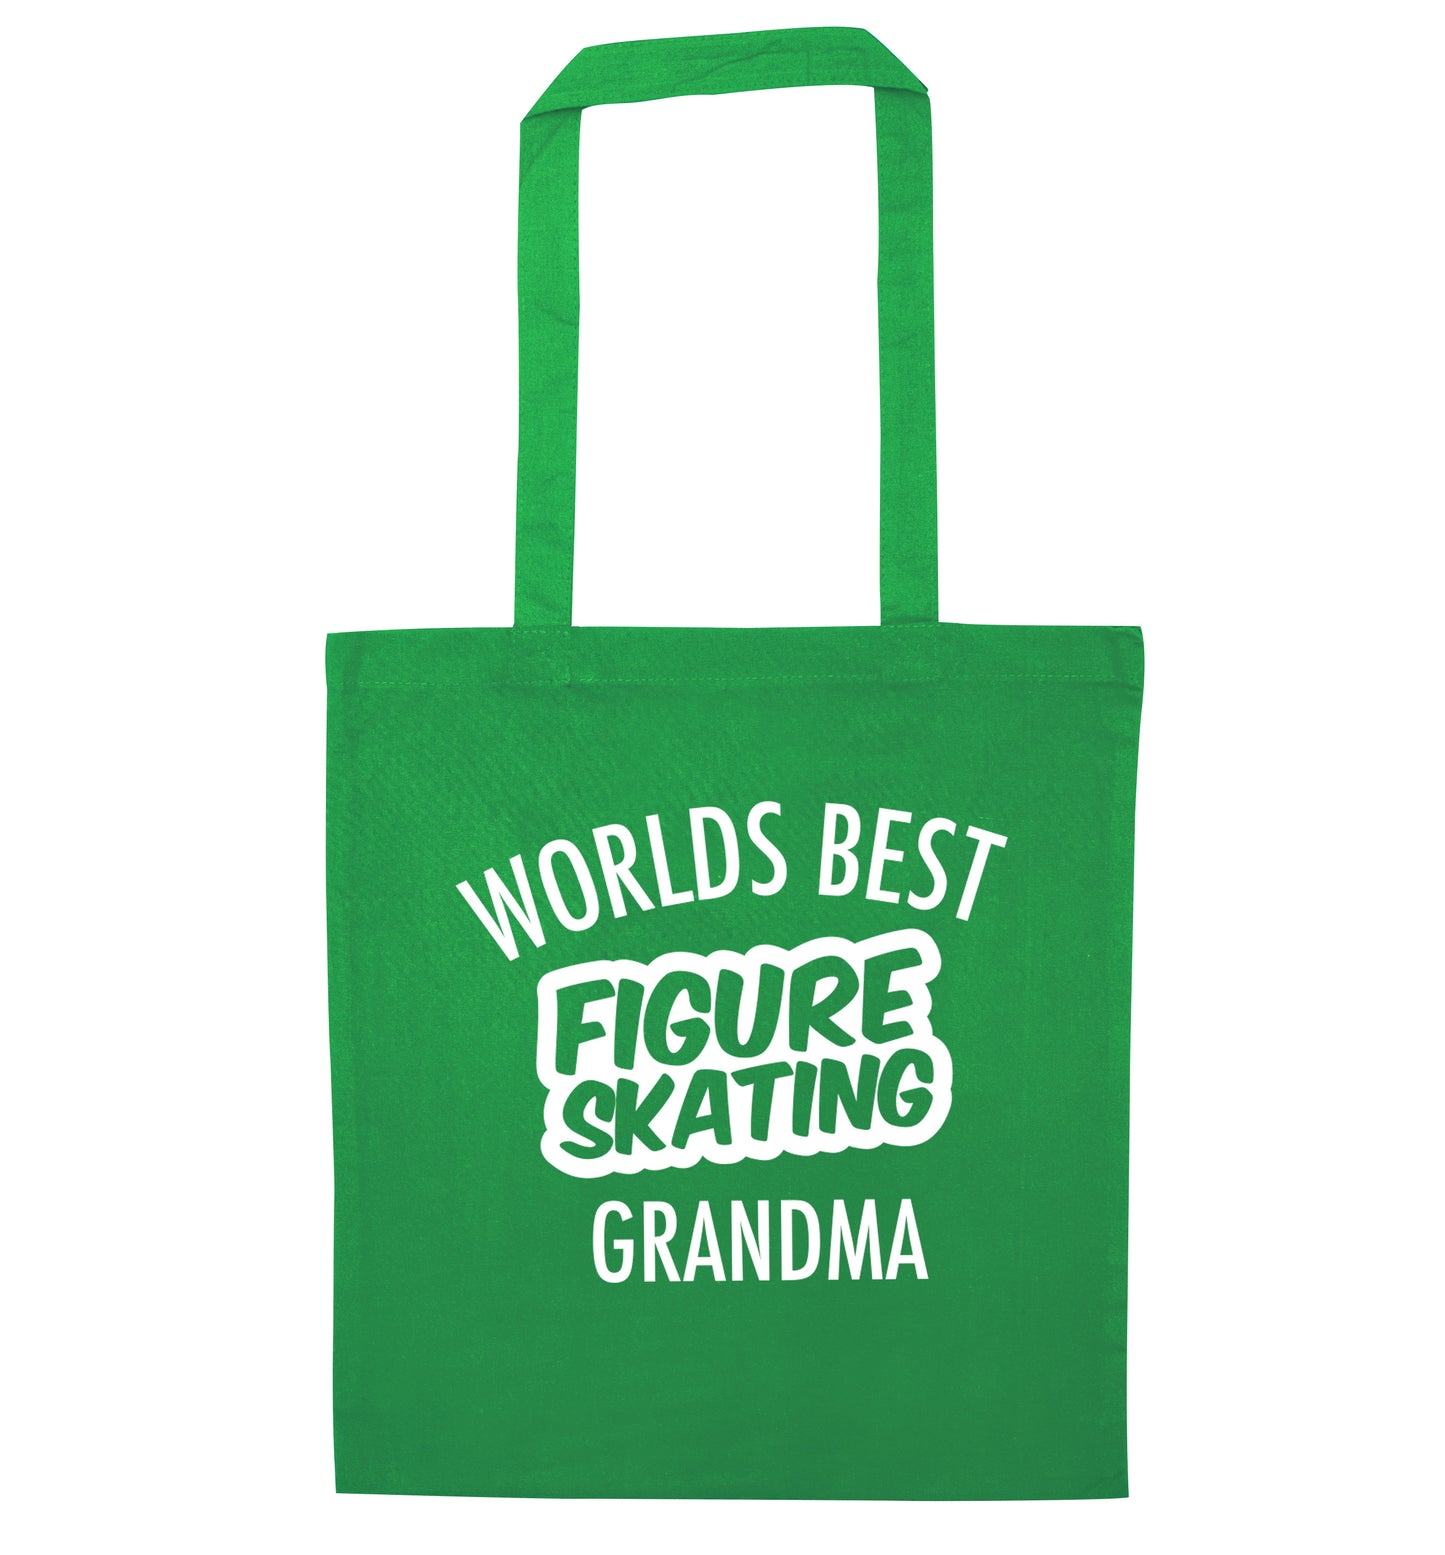 Worlds best figure skating grandma green tote bag